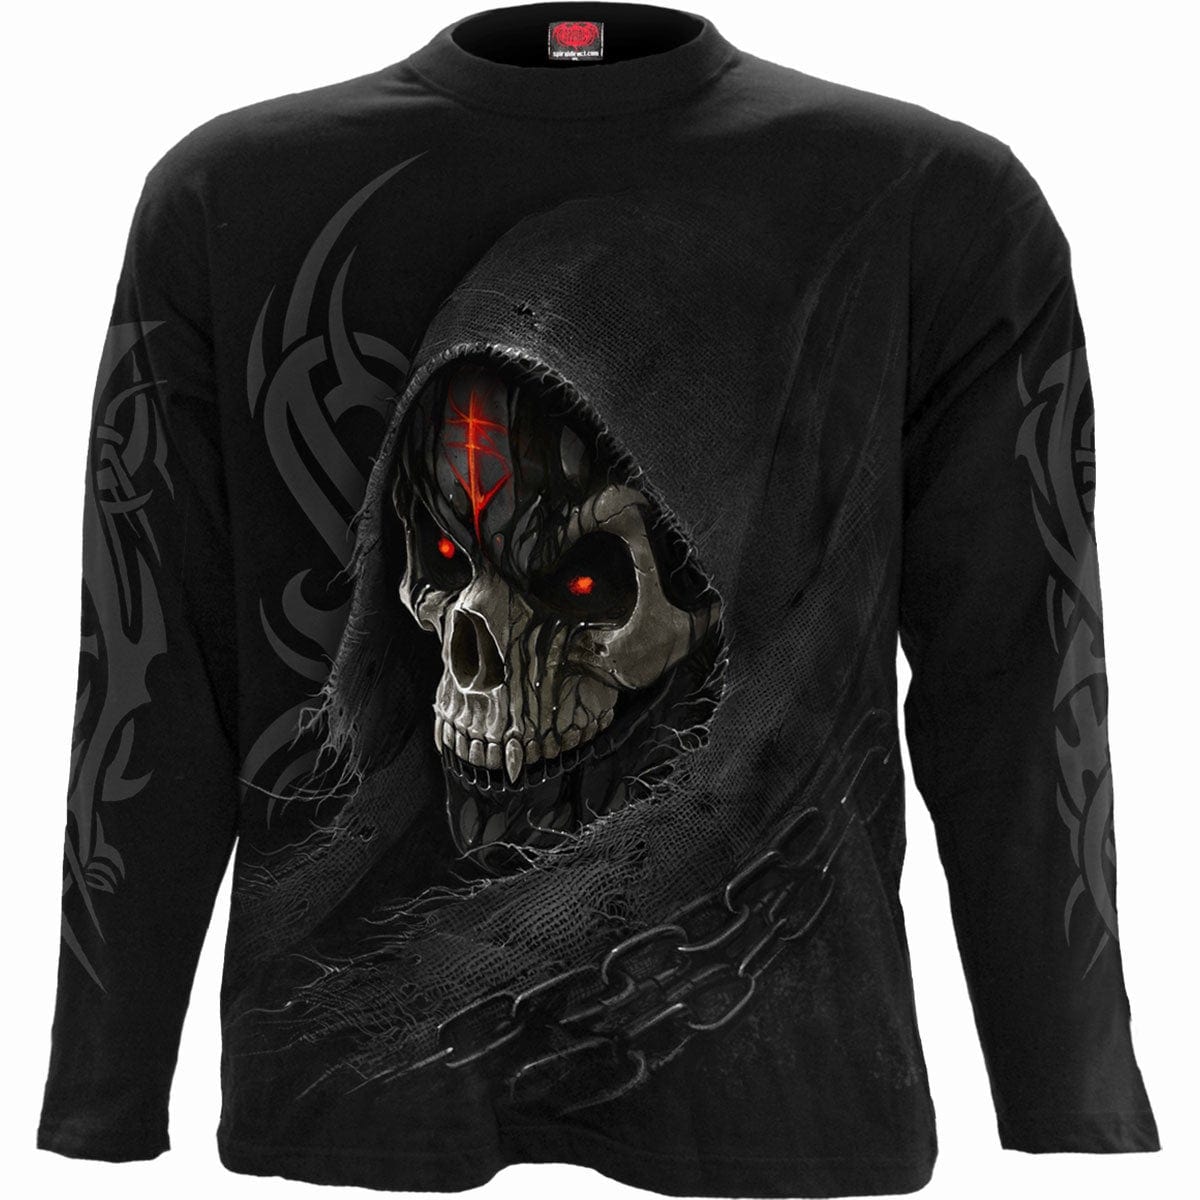 DARK DEATH - Longsleeve T-Shirt Black